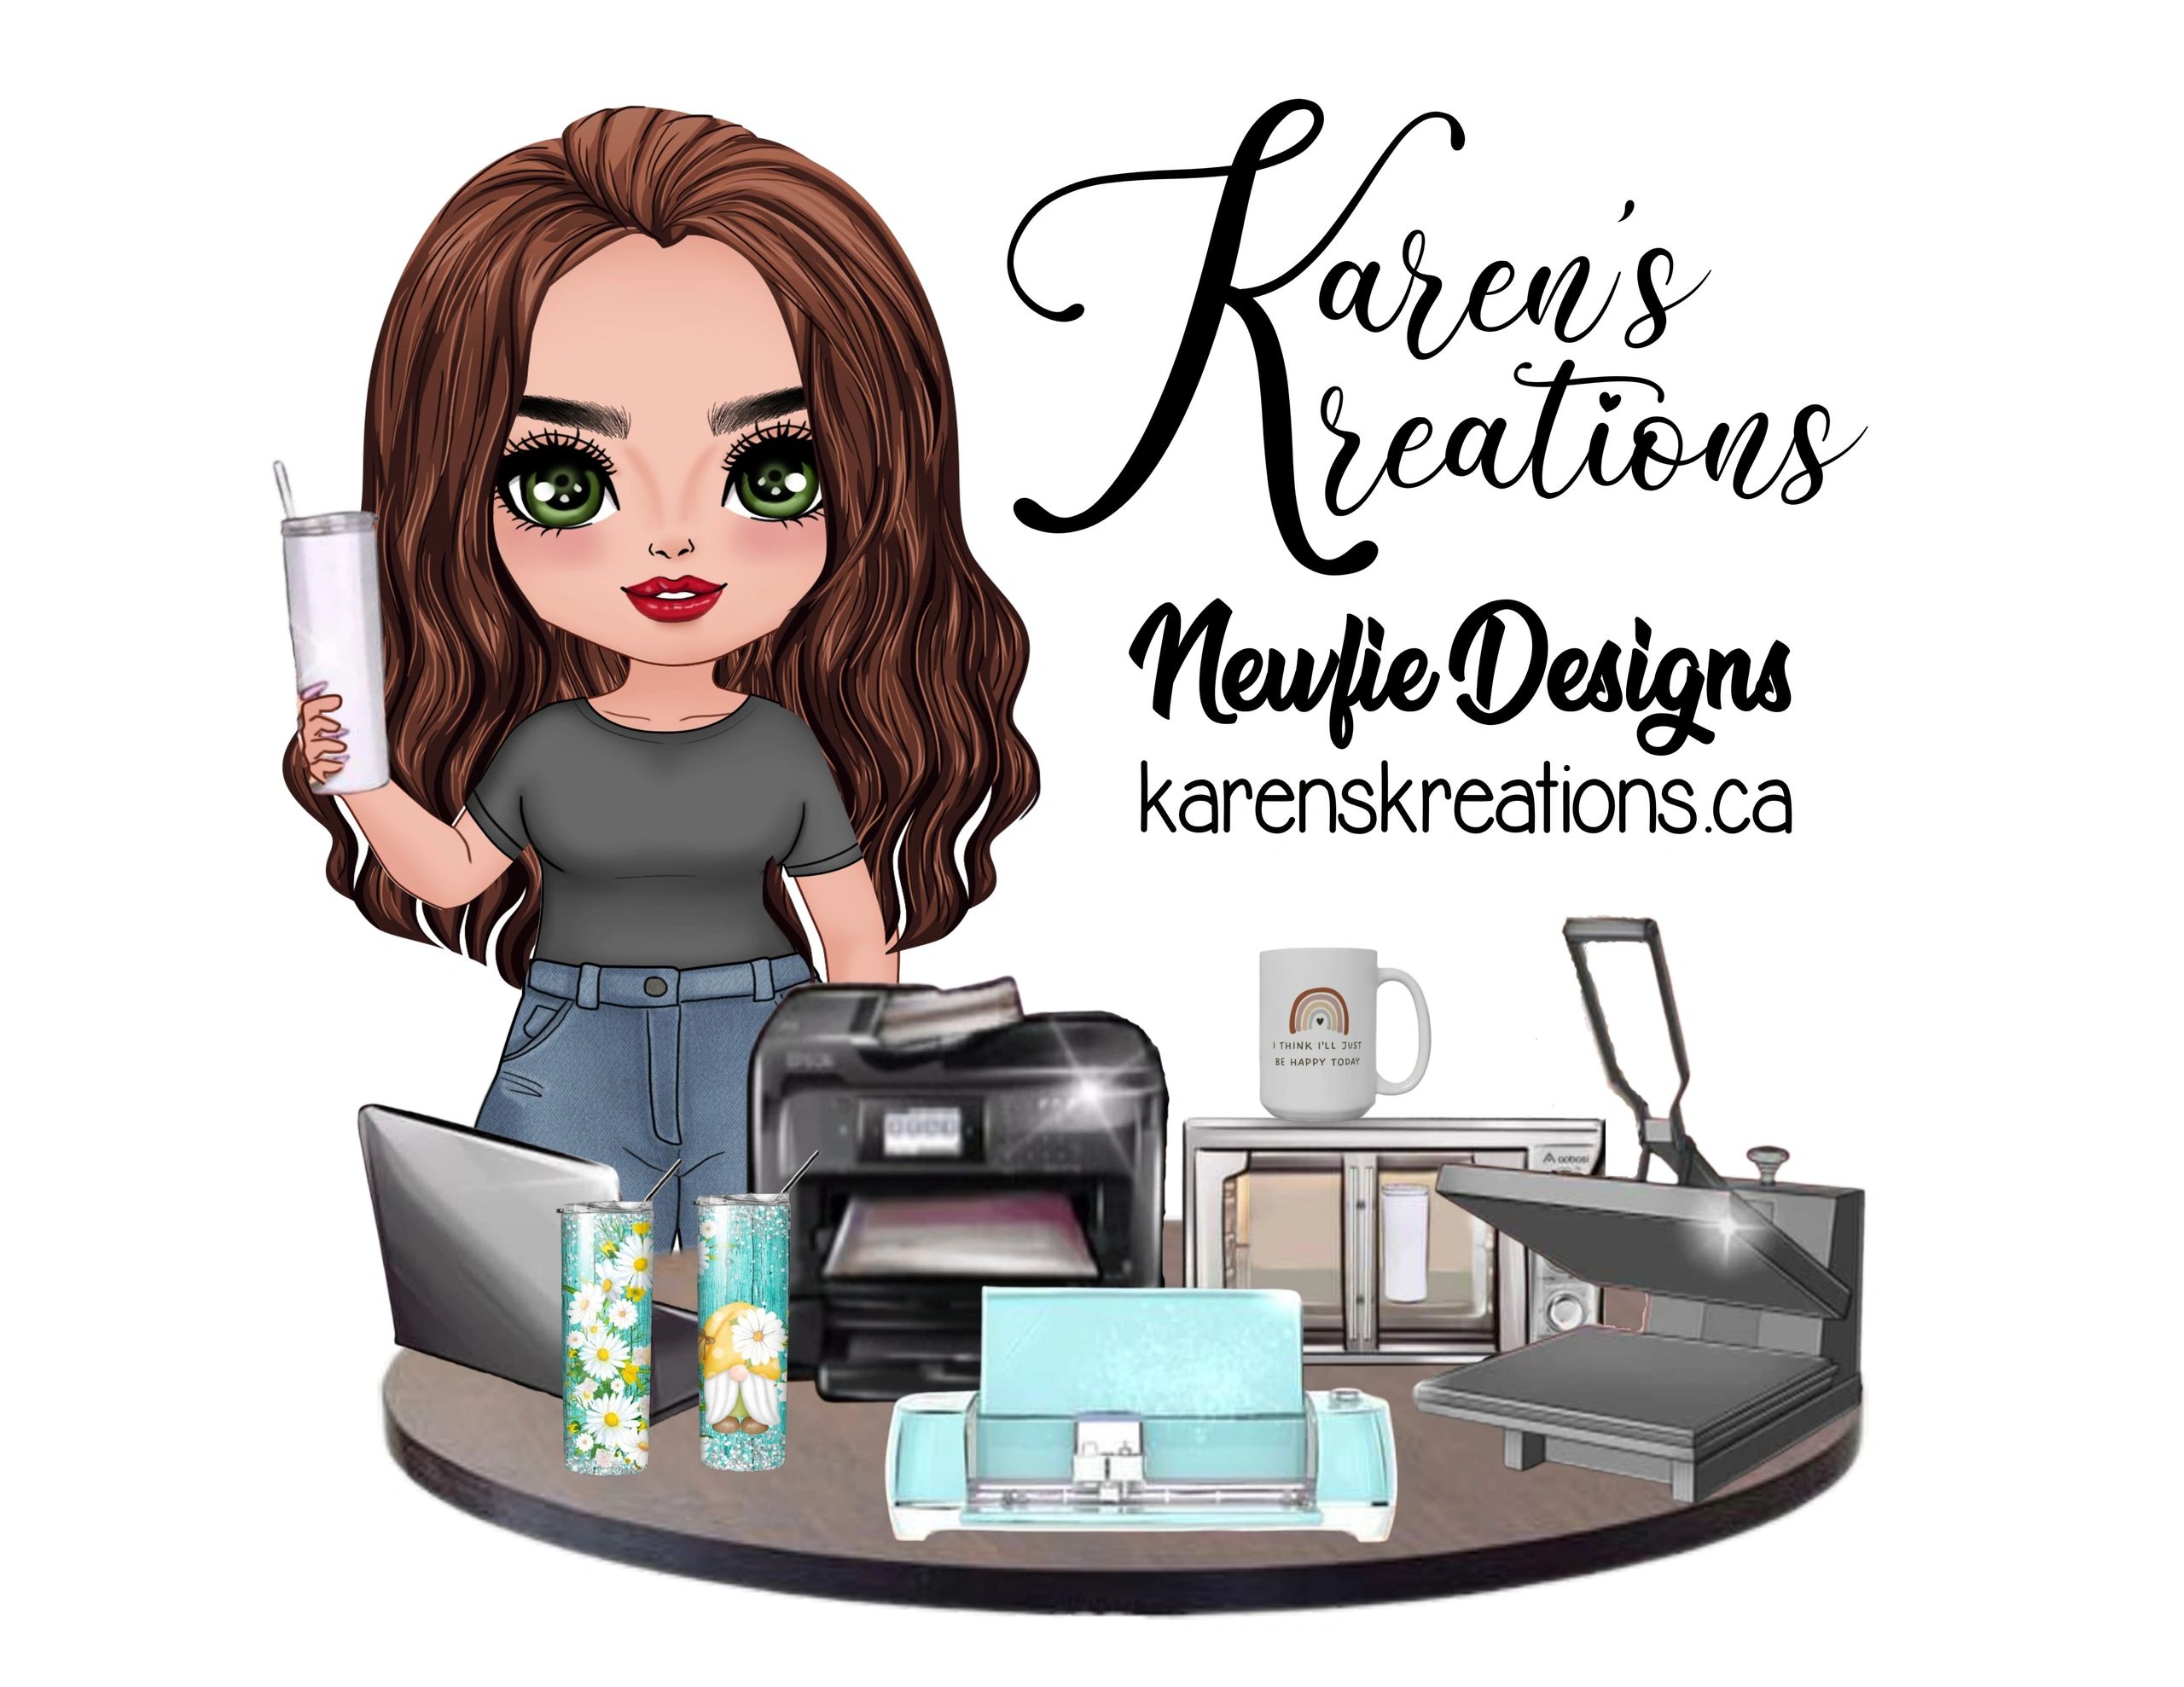 Welcome to Karen's Kreations